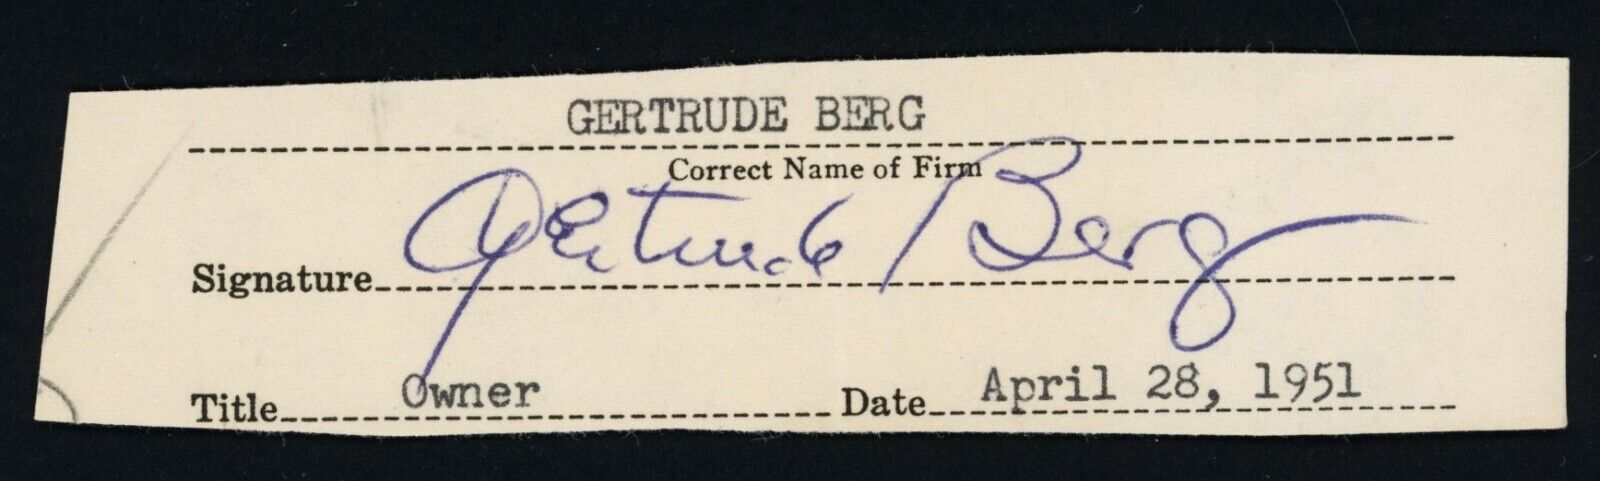 Gertrude Berg Autograph - The Goldbergs